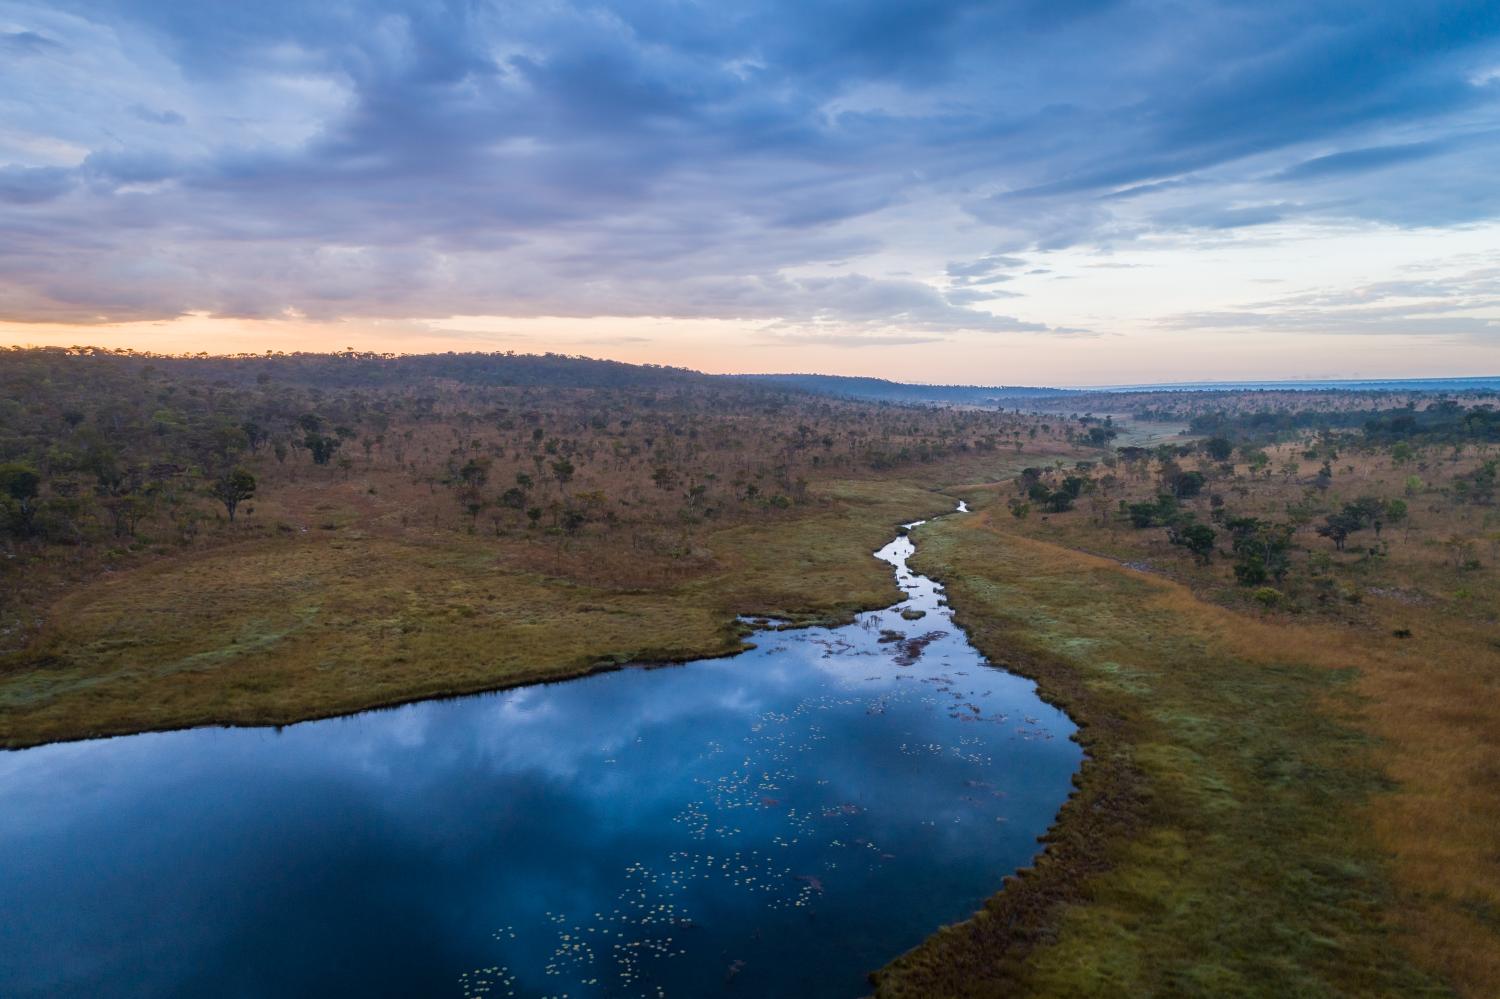 Photo by Kostadin Luchansky / National Geographic Okavango Wilderness Project.